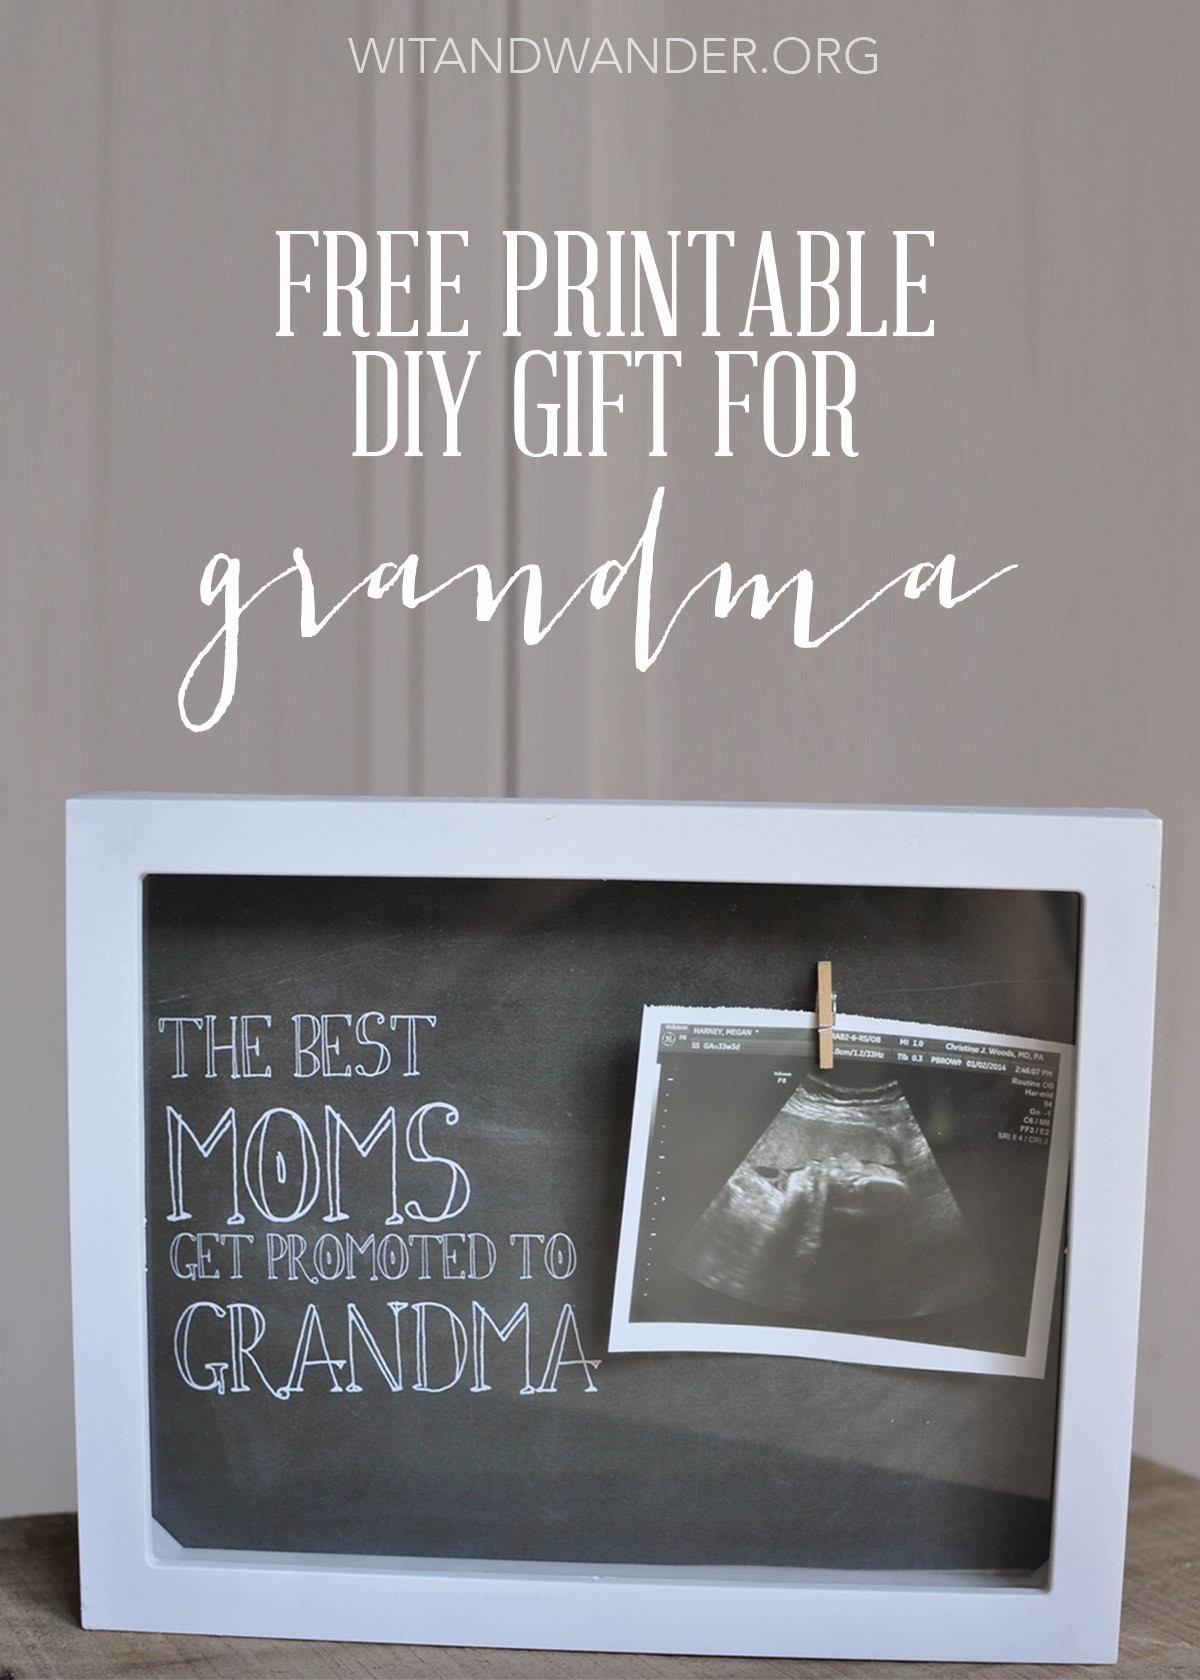 DIY Gifts For Grandmas
 Homemade Shadow Box Gift for Grandma Wit & Wander